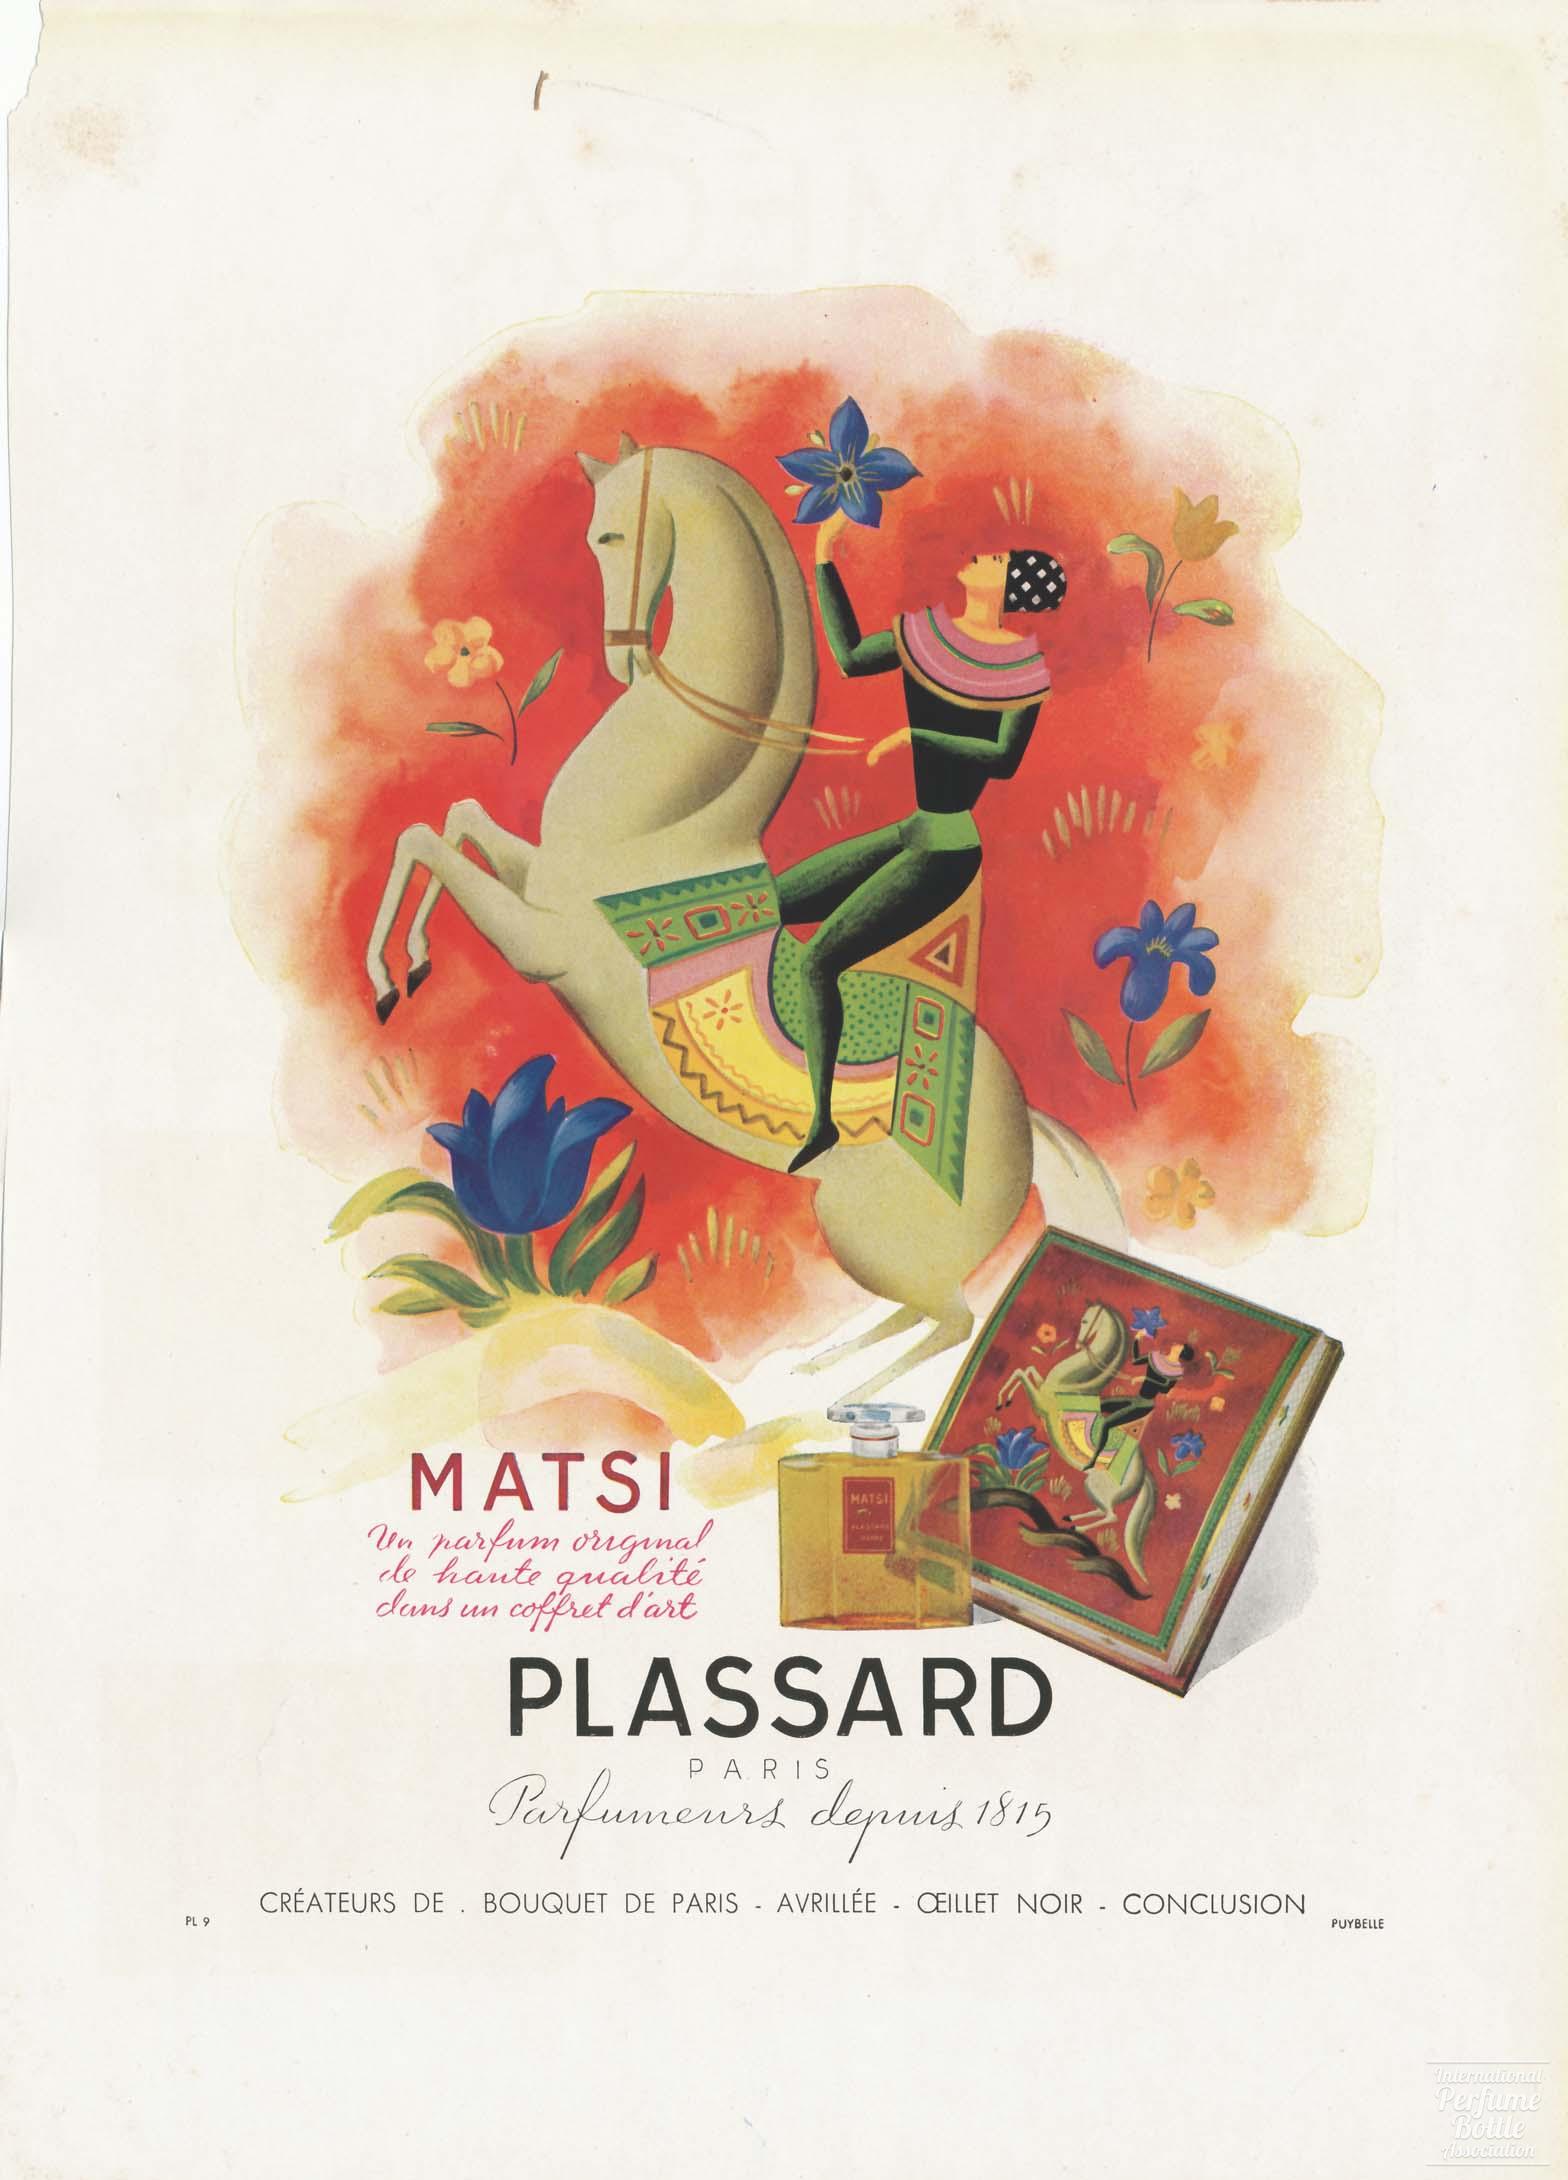 "Matsi" by Plassard Advertisement - 1946